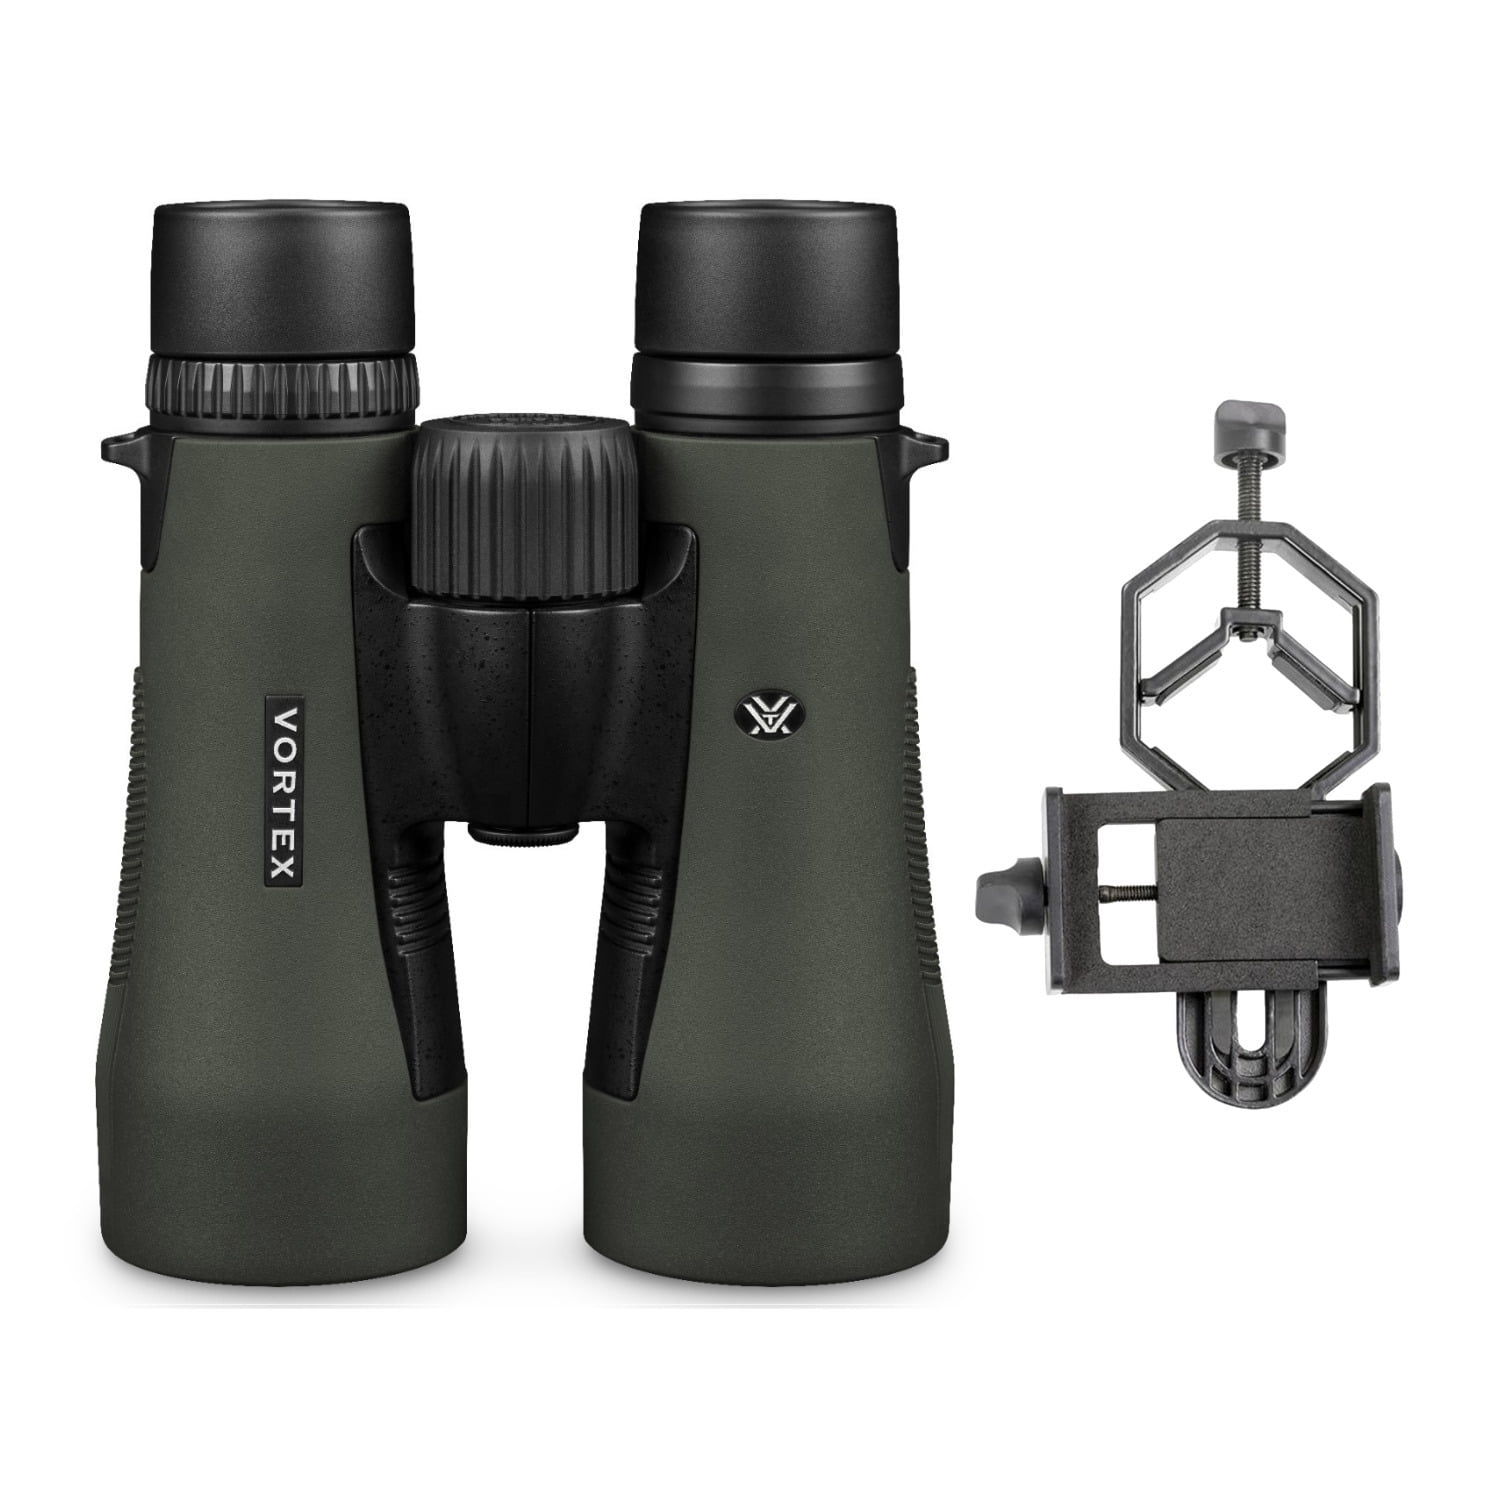 Green for sale online Vortex Diamondback HD 10x50 Binoculars 